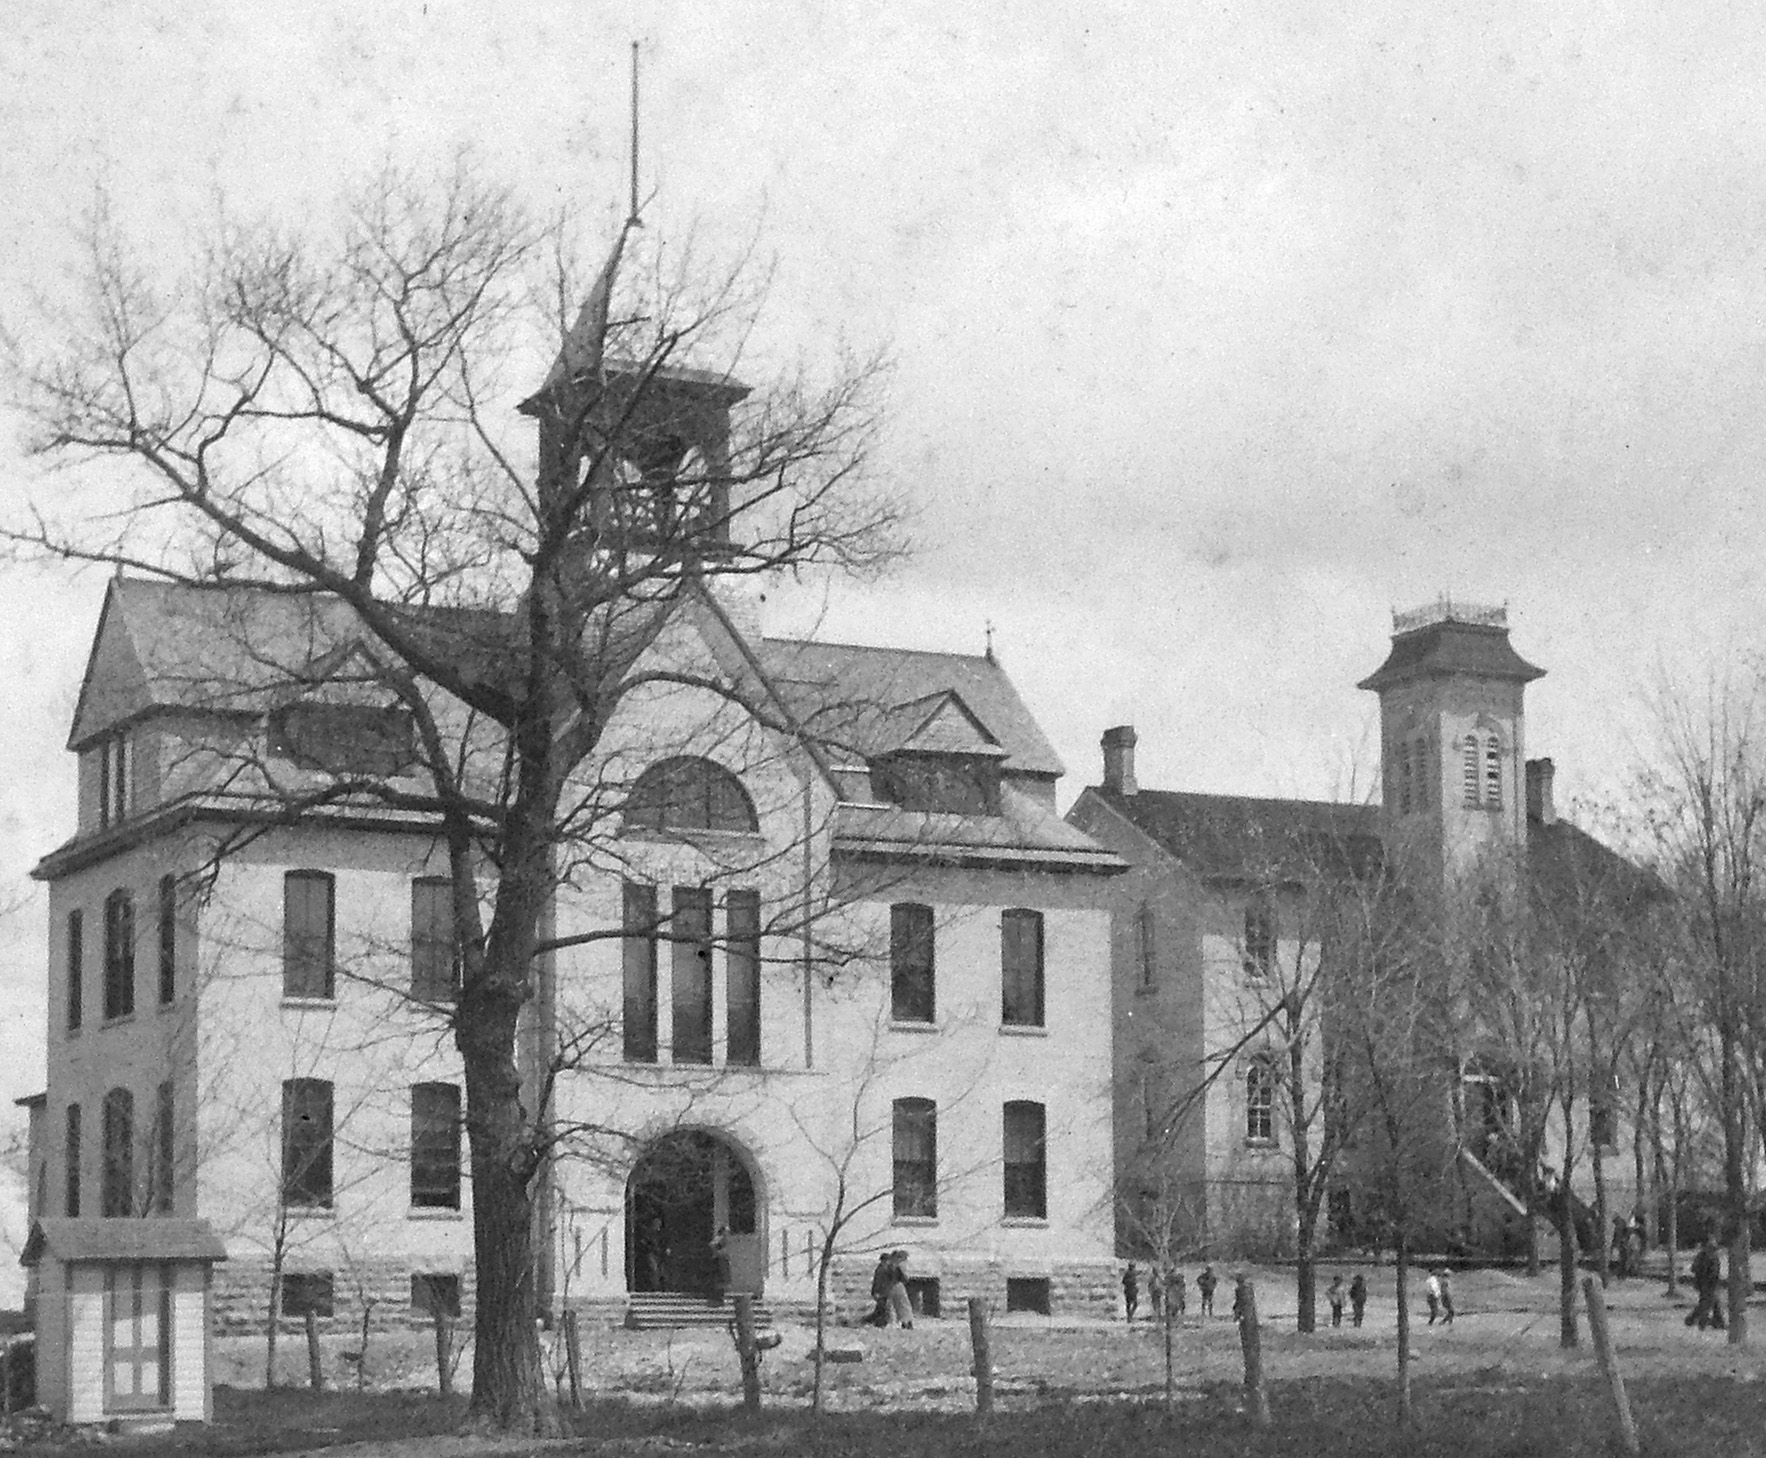 1892 High School Building circa 1900